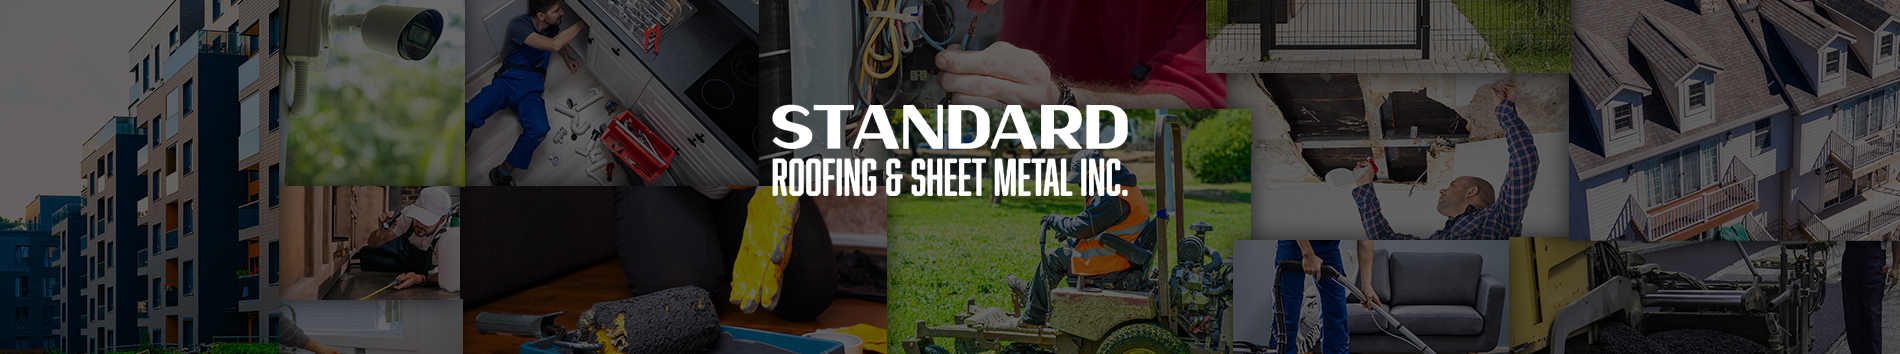 Standard Roofing & Sheet Metal, Inc.